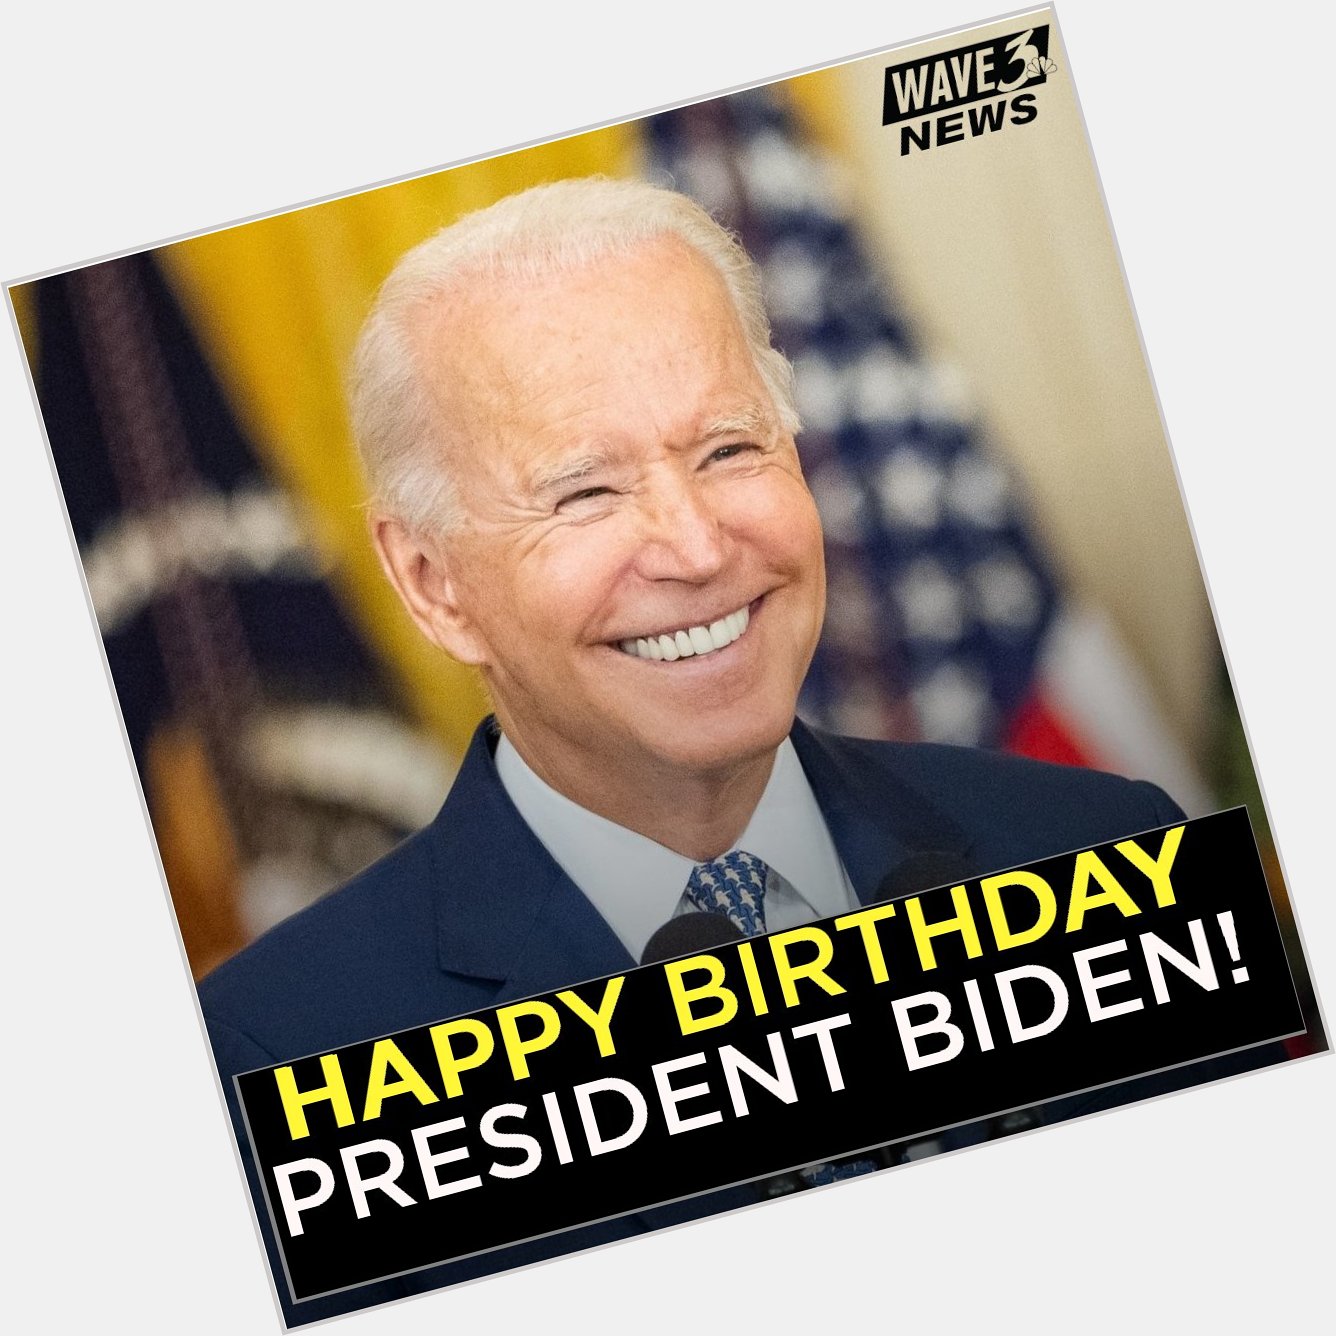 Sending happy birthday wishes to President Joe Biden, who turns 79 today 